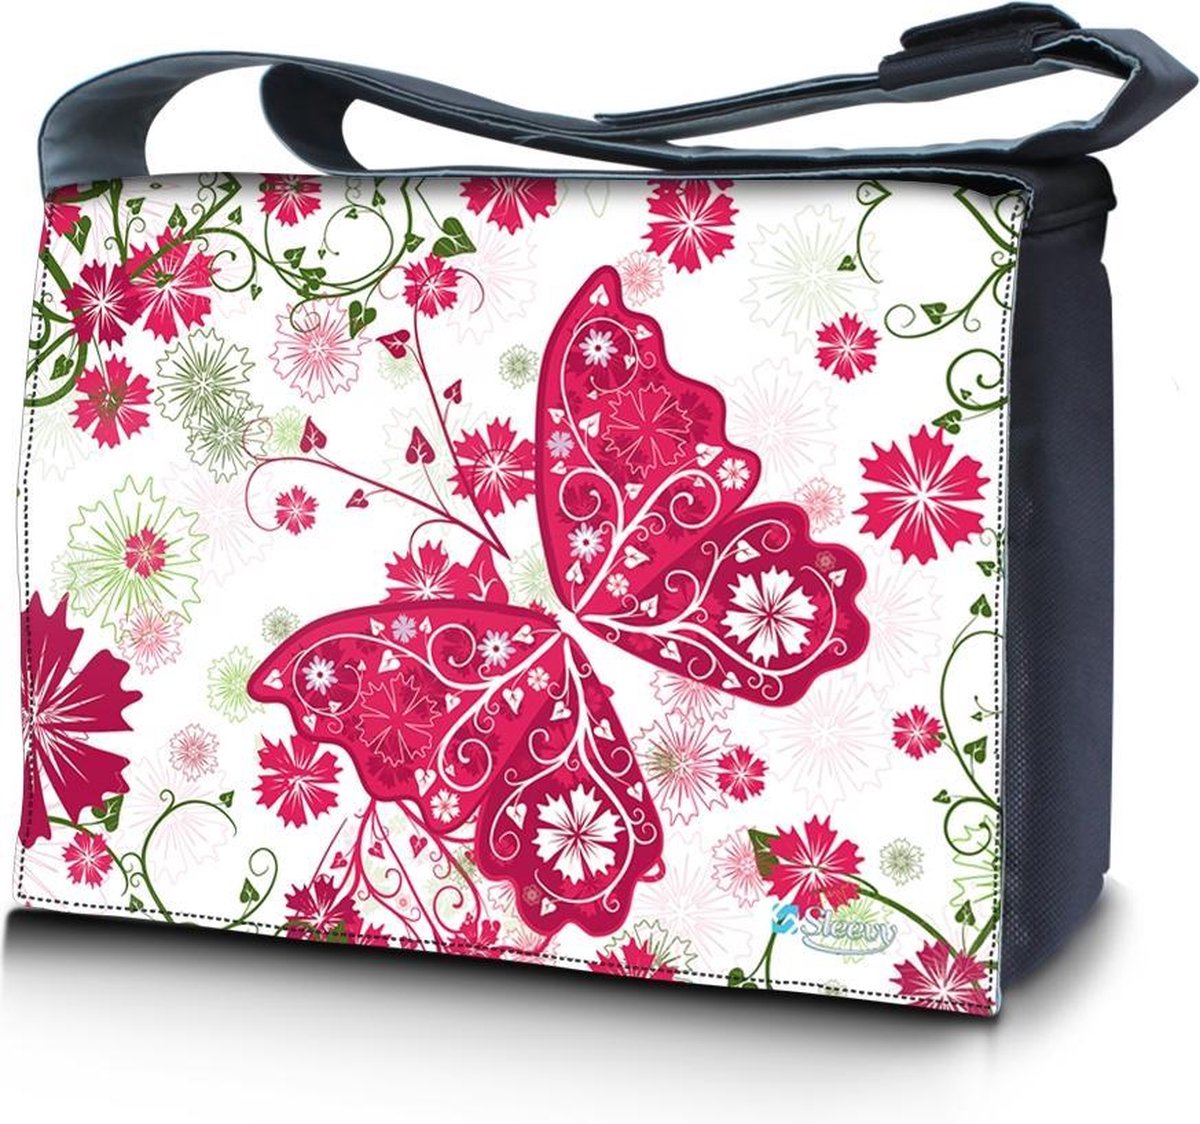 Sleevy 15,6 laptoptas / messenger tas roze vlinder - laptoptas - schooltas